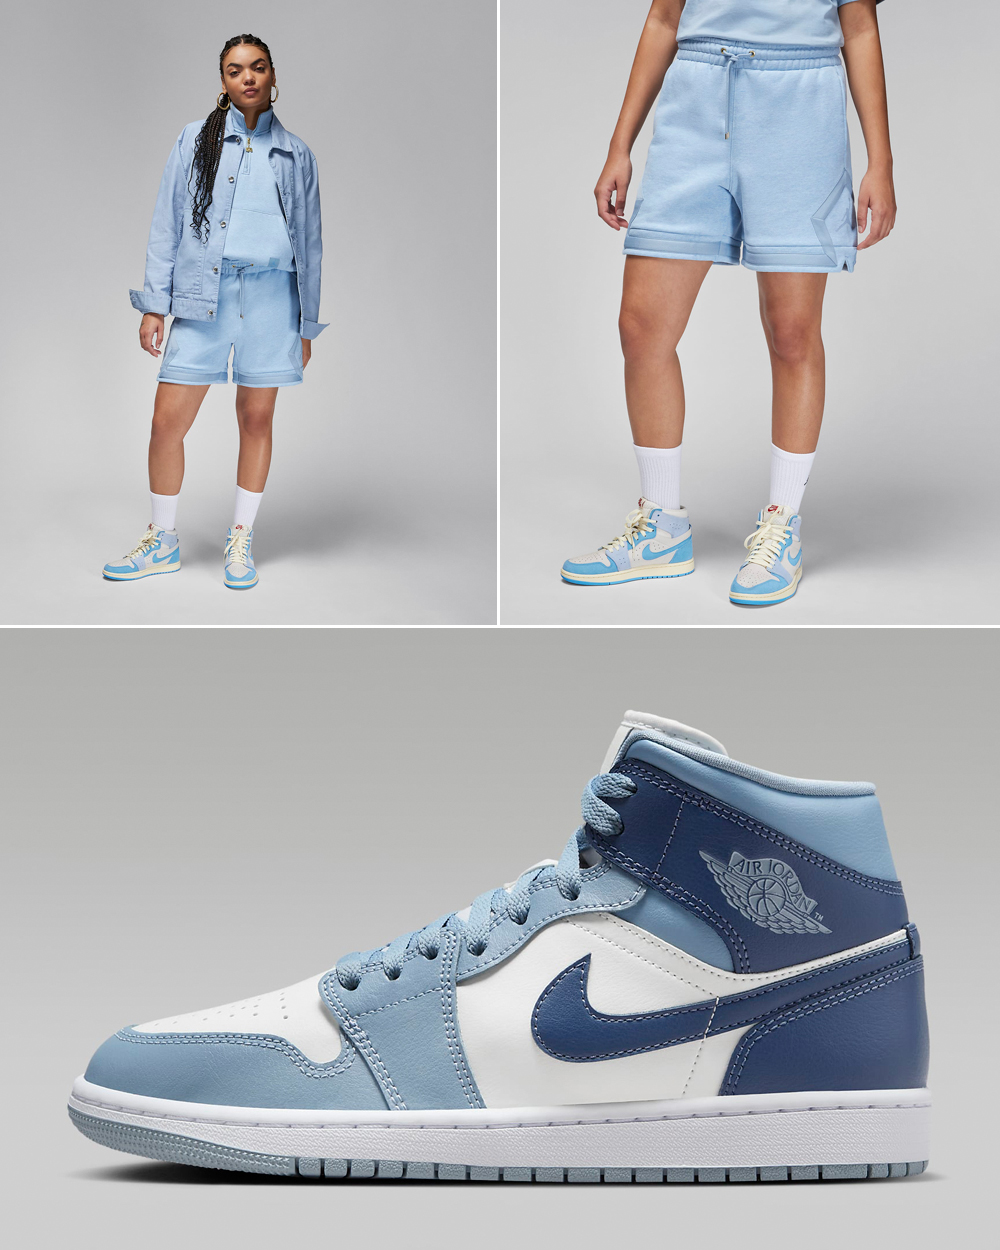 Air-Jordan-1-Mid-Womens-Blue-Grey-Shorts-Matching-Outfit